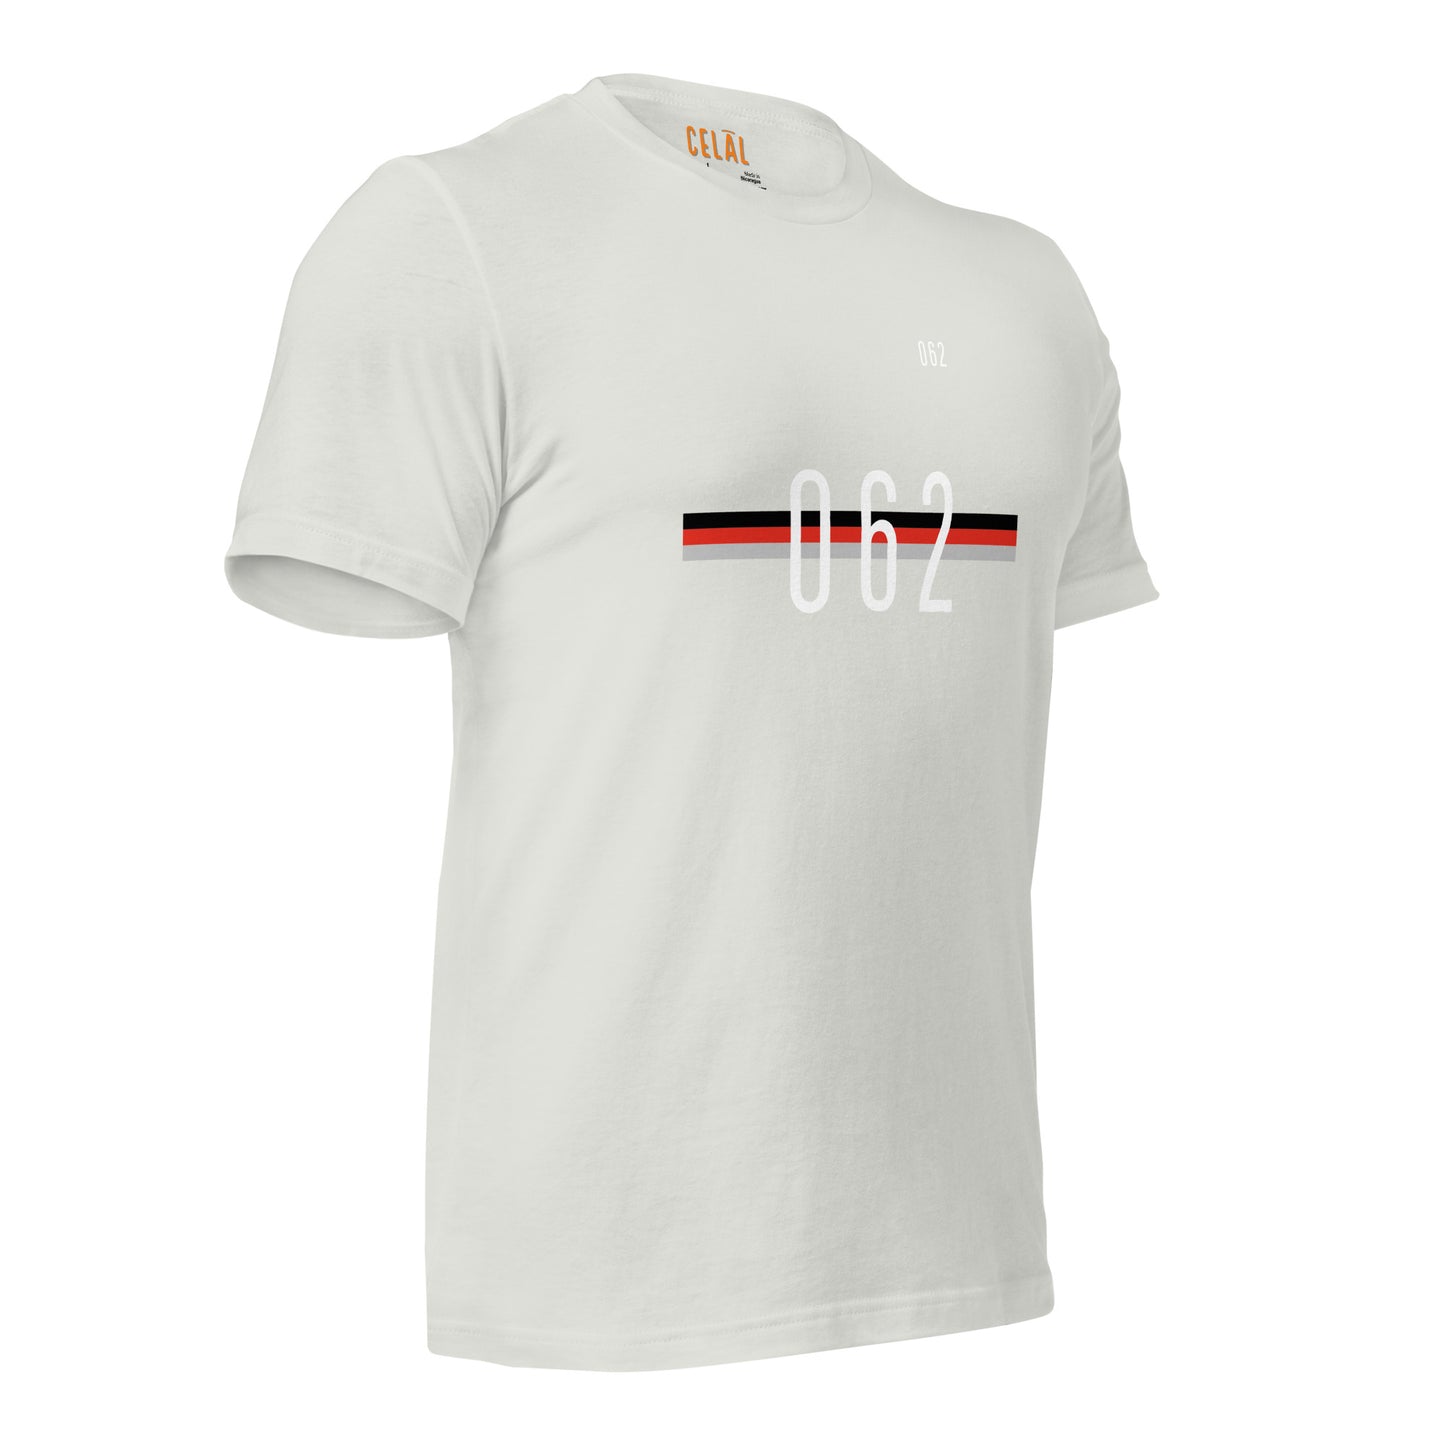 062 Unisex t-shirt